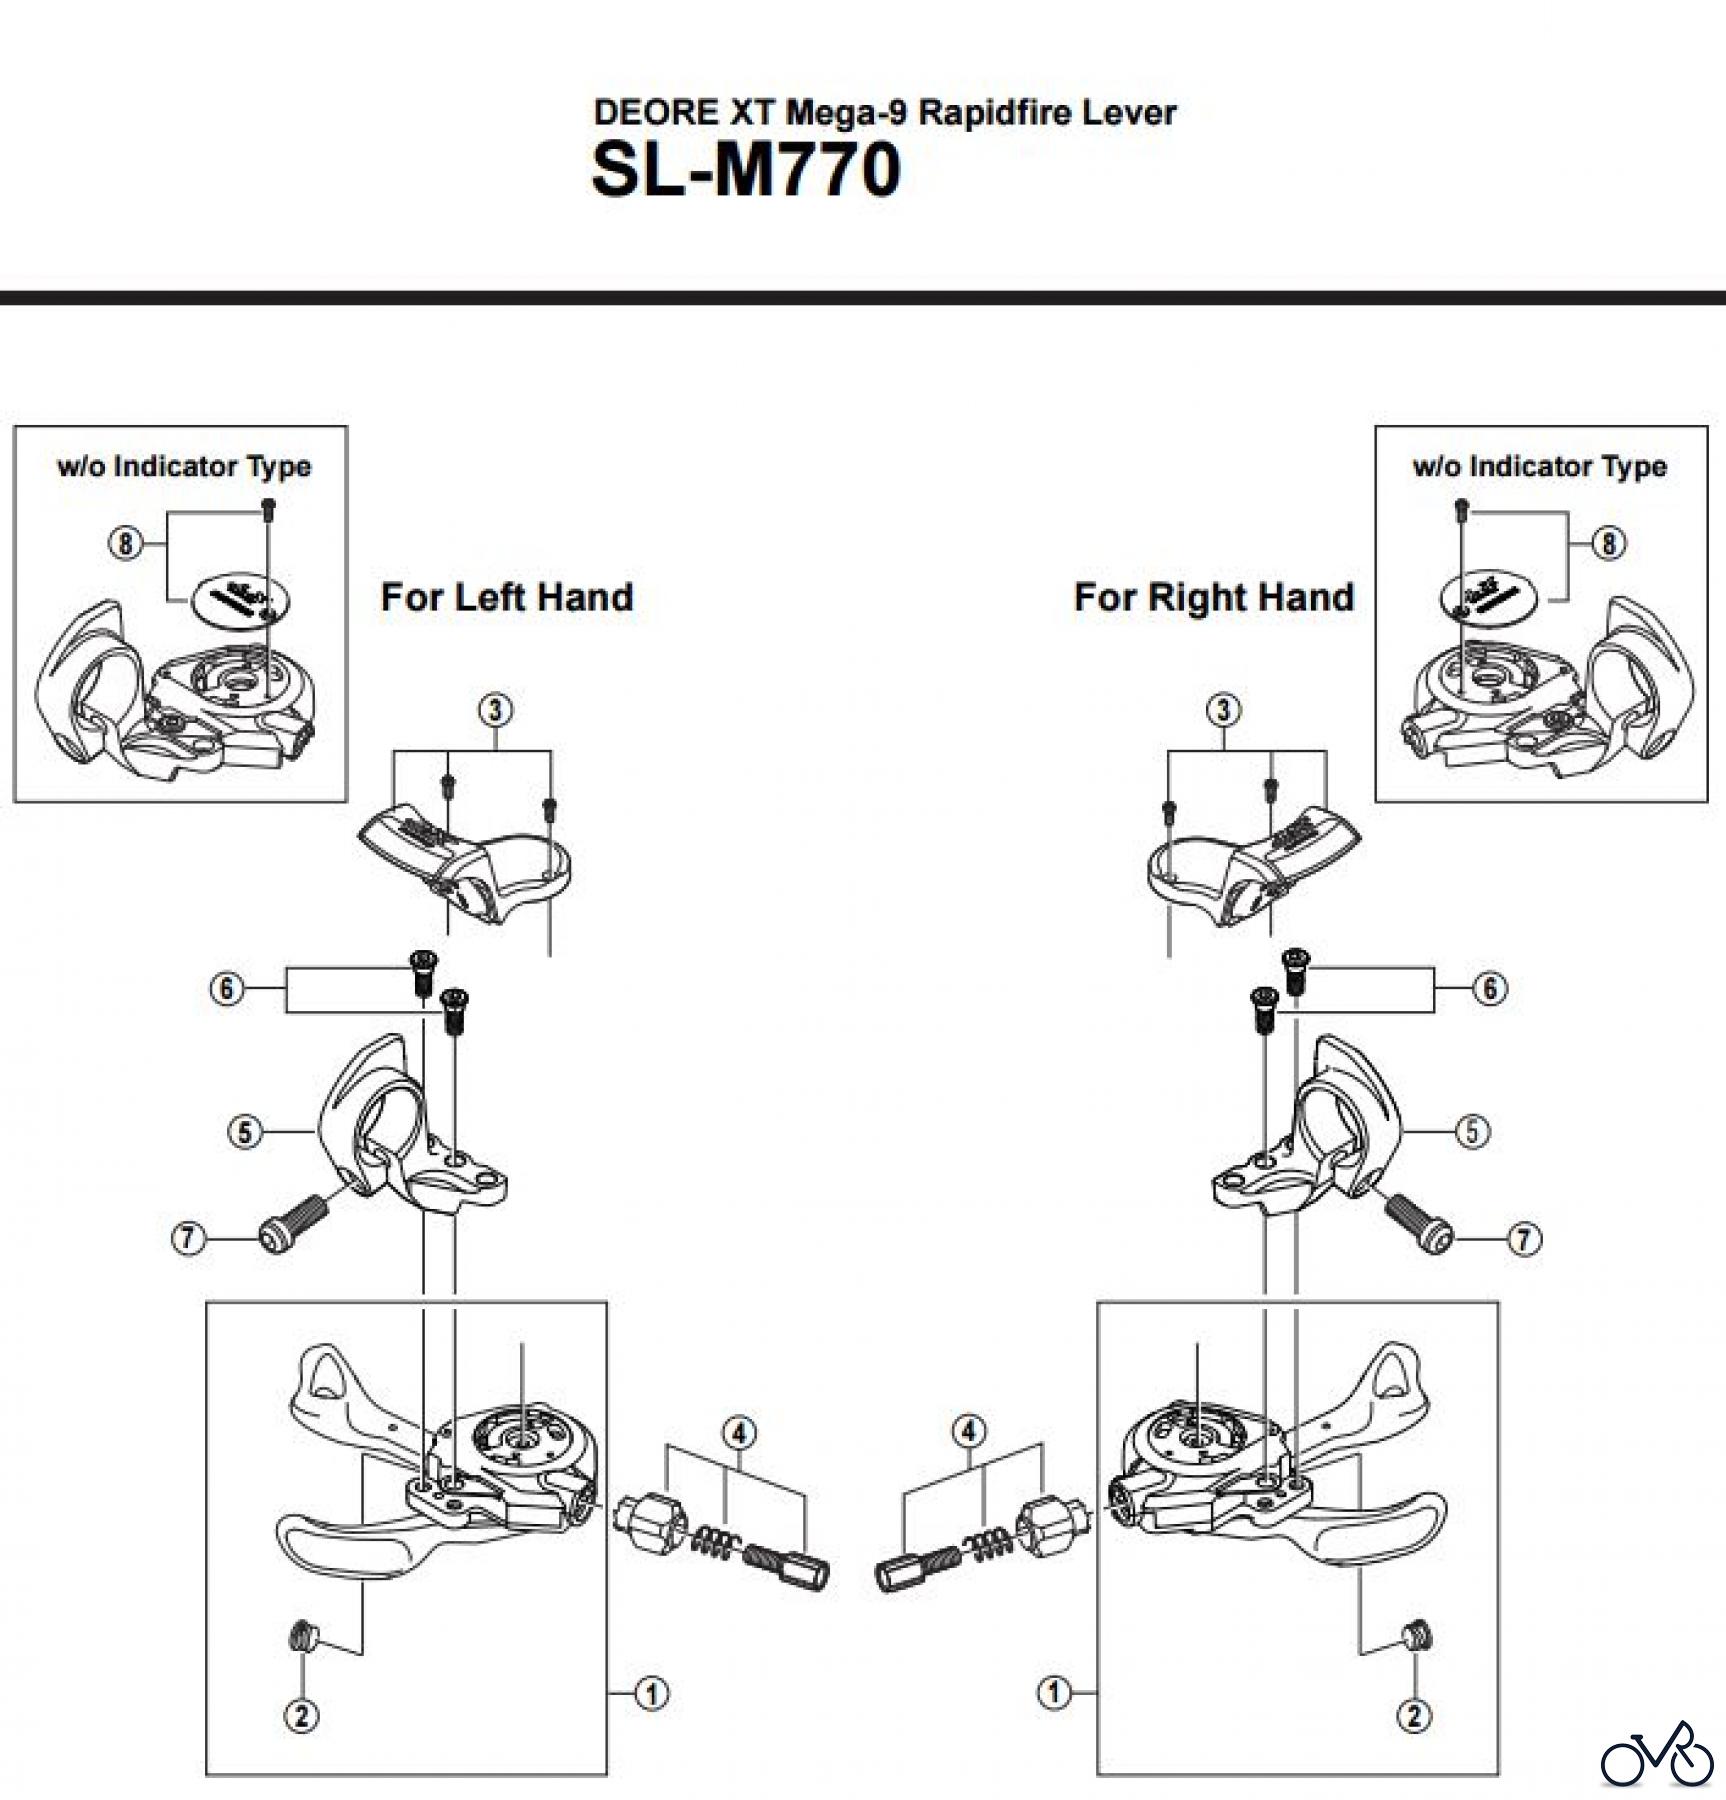  Shimano SL Shift Lever - Schalthebel SL-M770-2708 DEORE XT Mega-9 Rapidfire Lever 